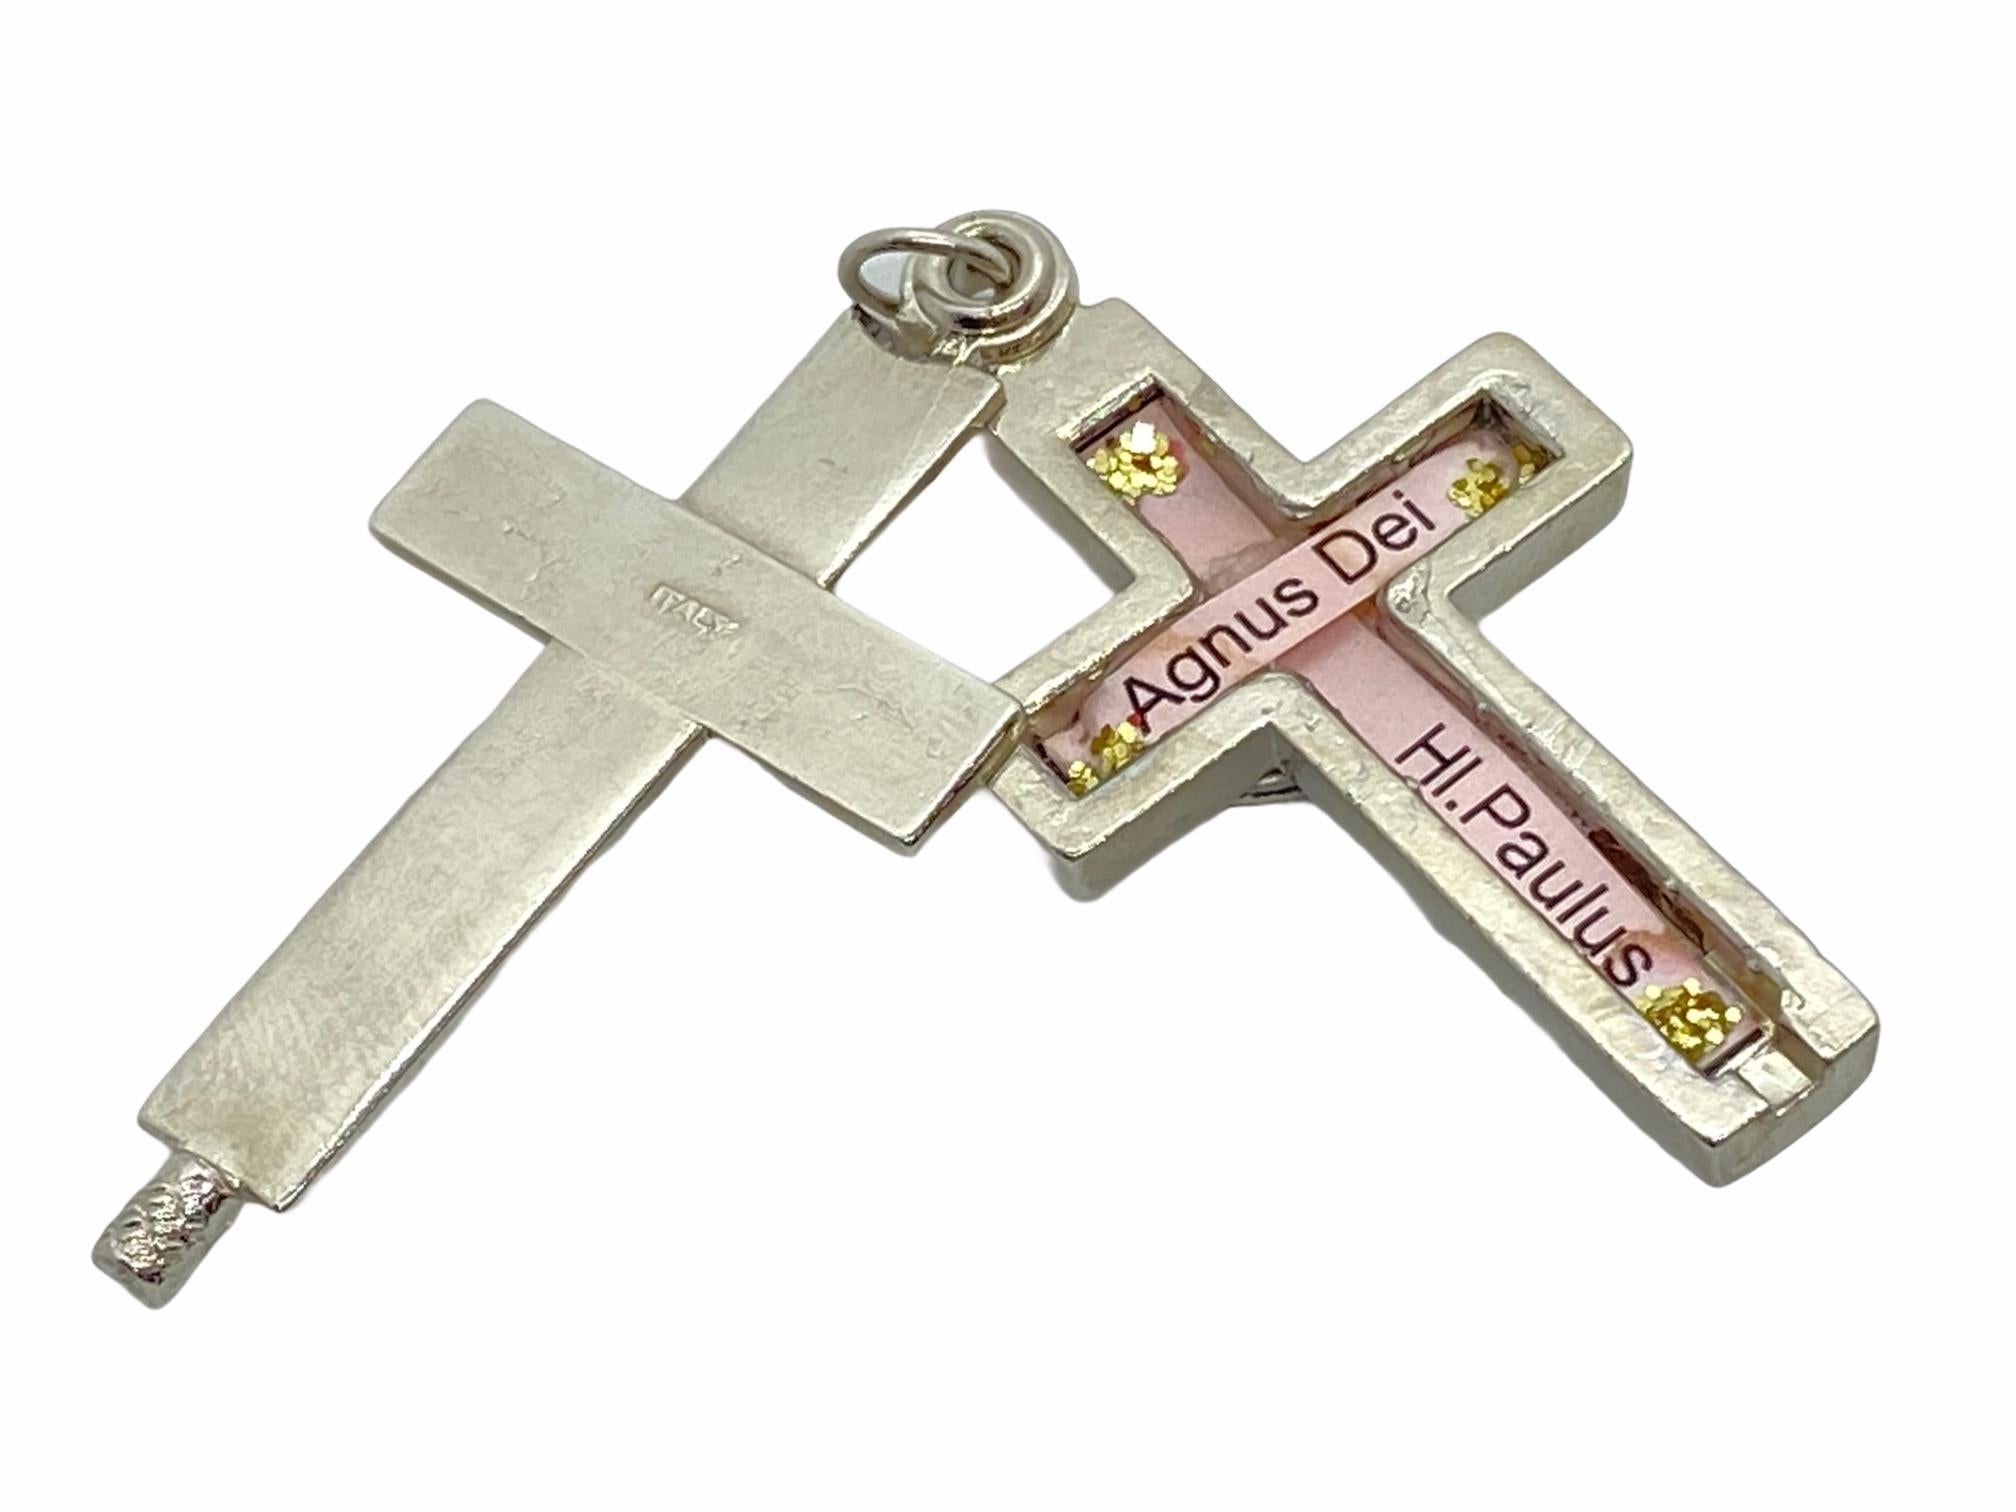 Mid-20th Century Vintage Catholic Reliquary Box Crucifix Pendant with Relics of Saint Paul